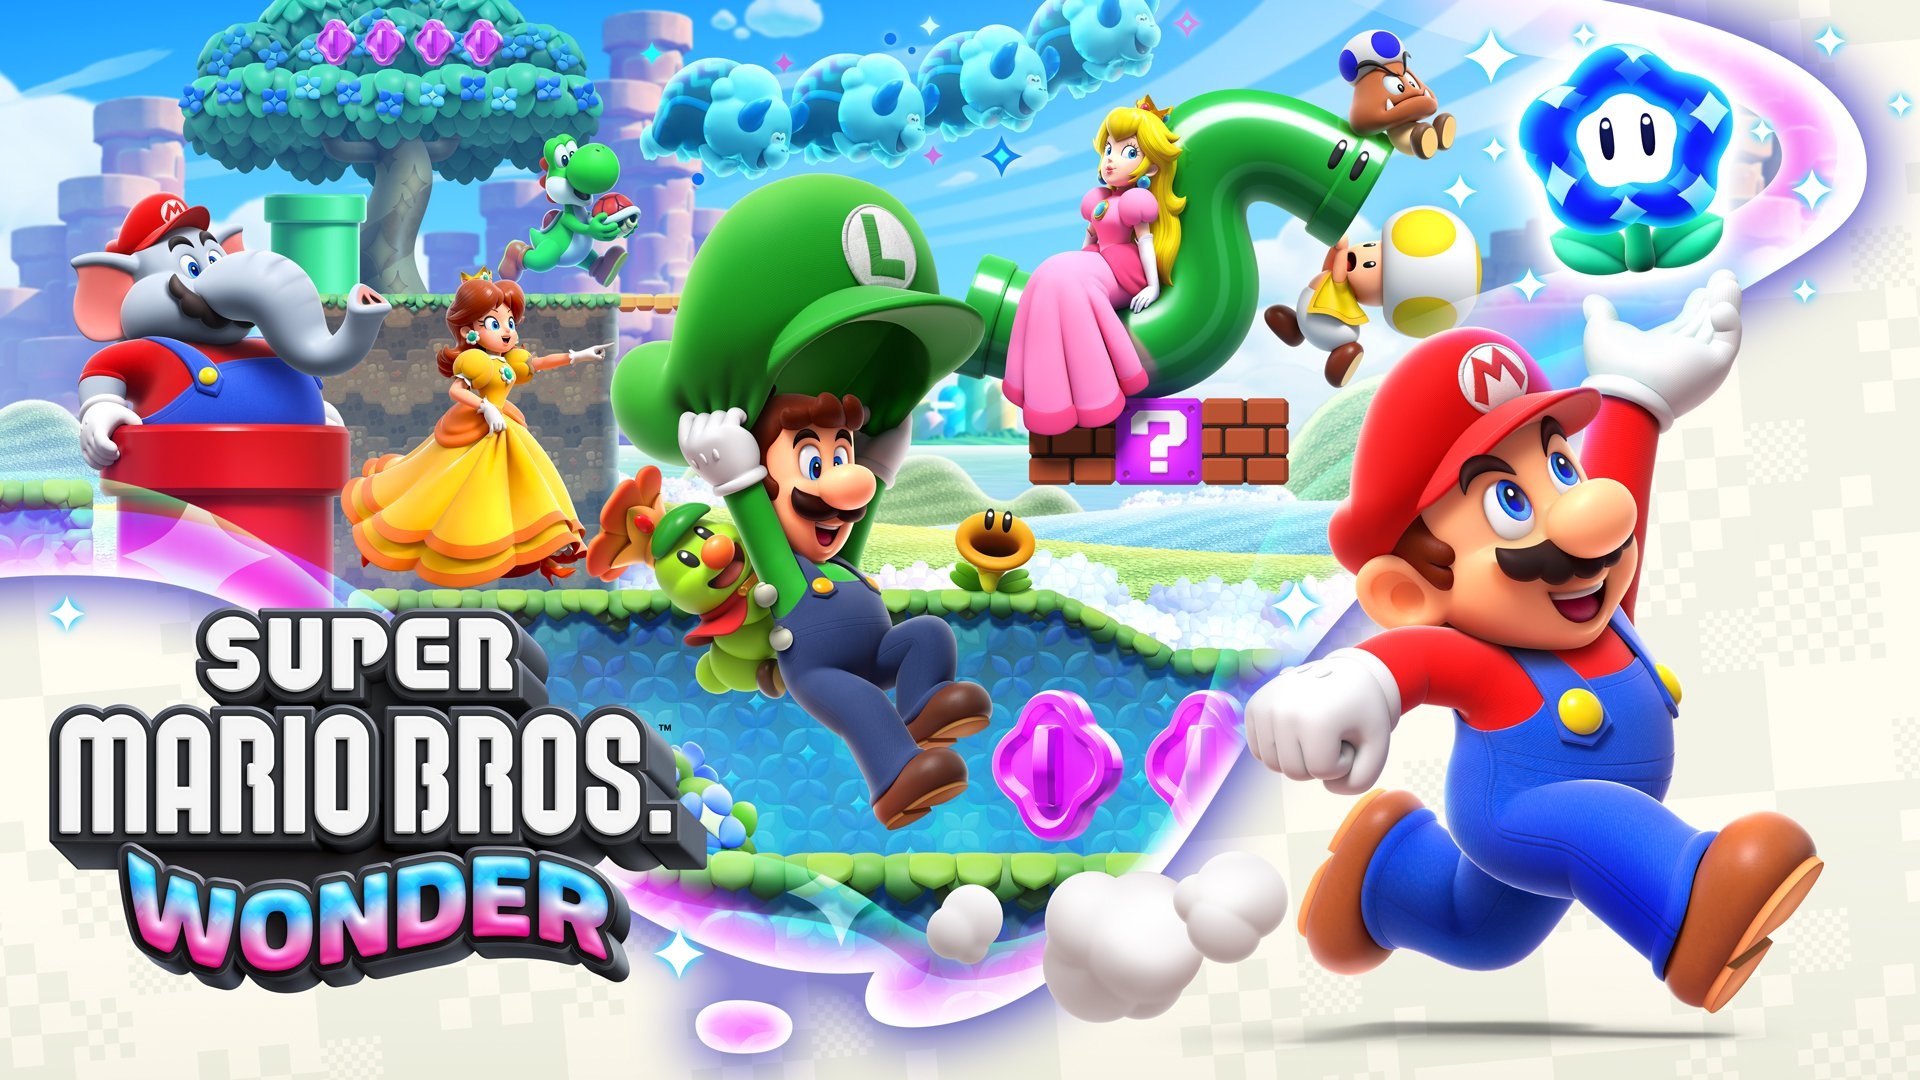 Super Mario 3D All Stars Collection - Nintendo Switch - Interactive  Gamestore